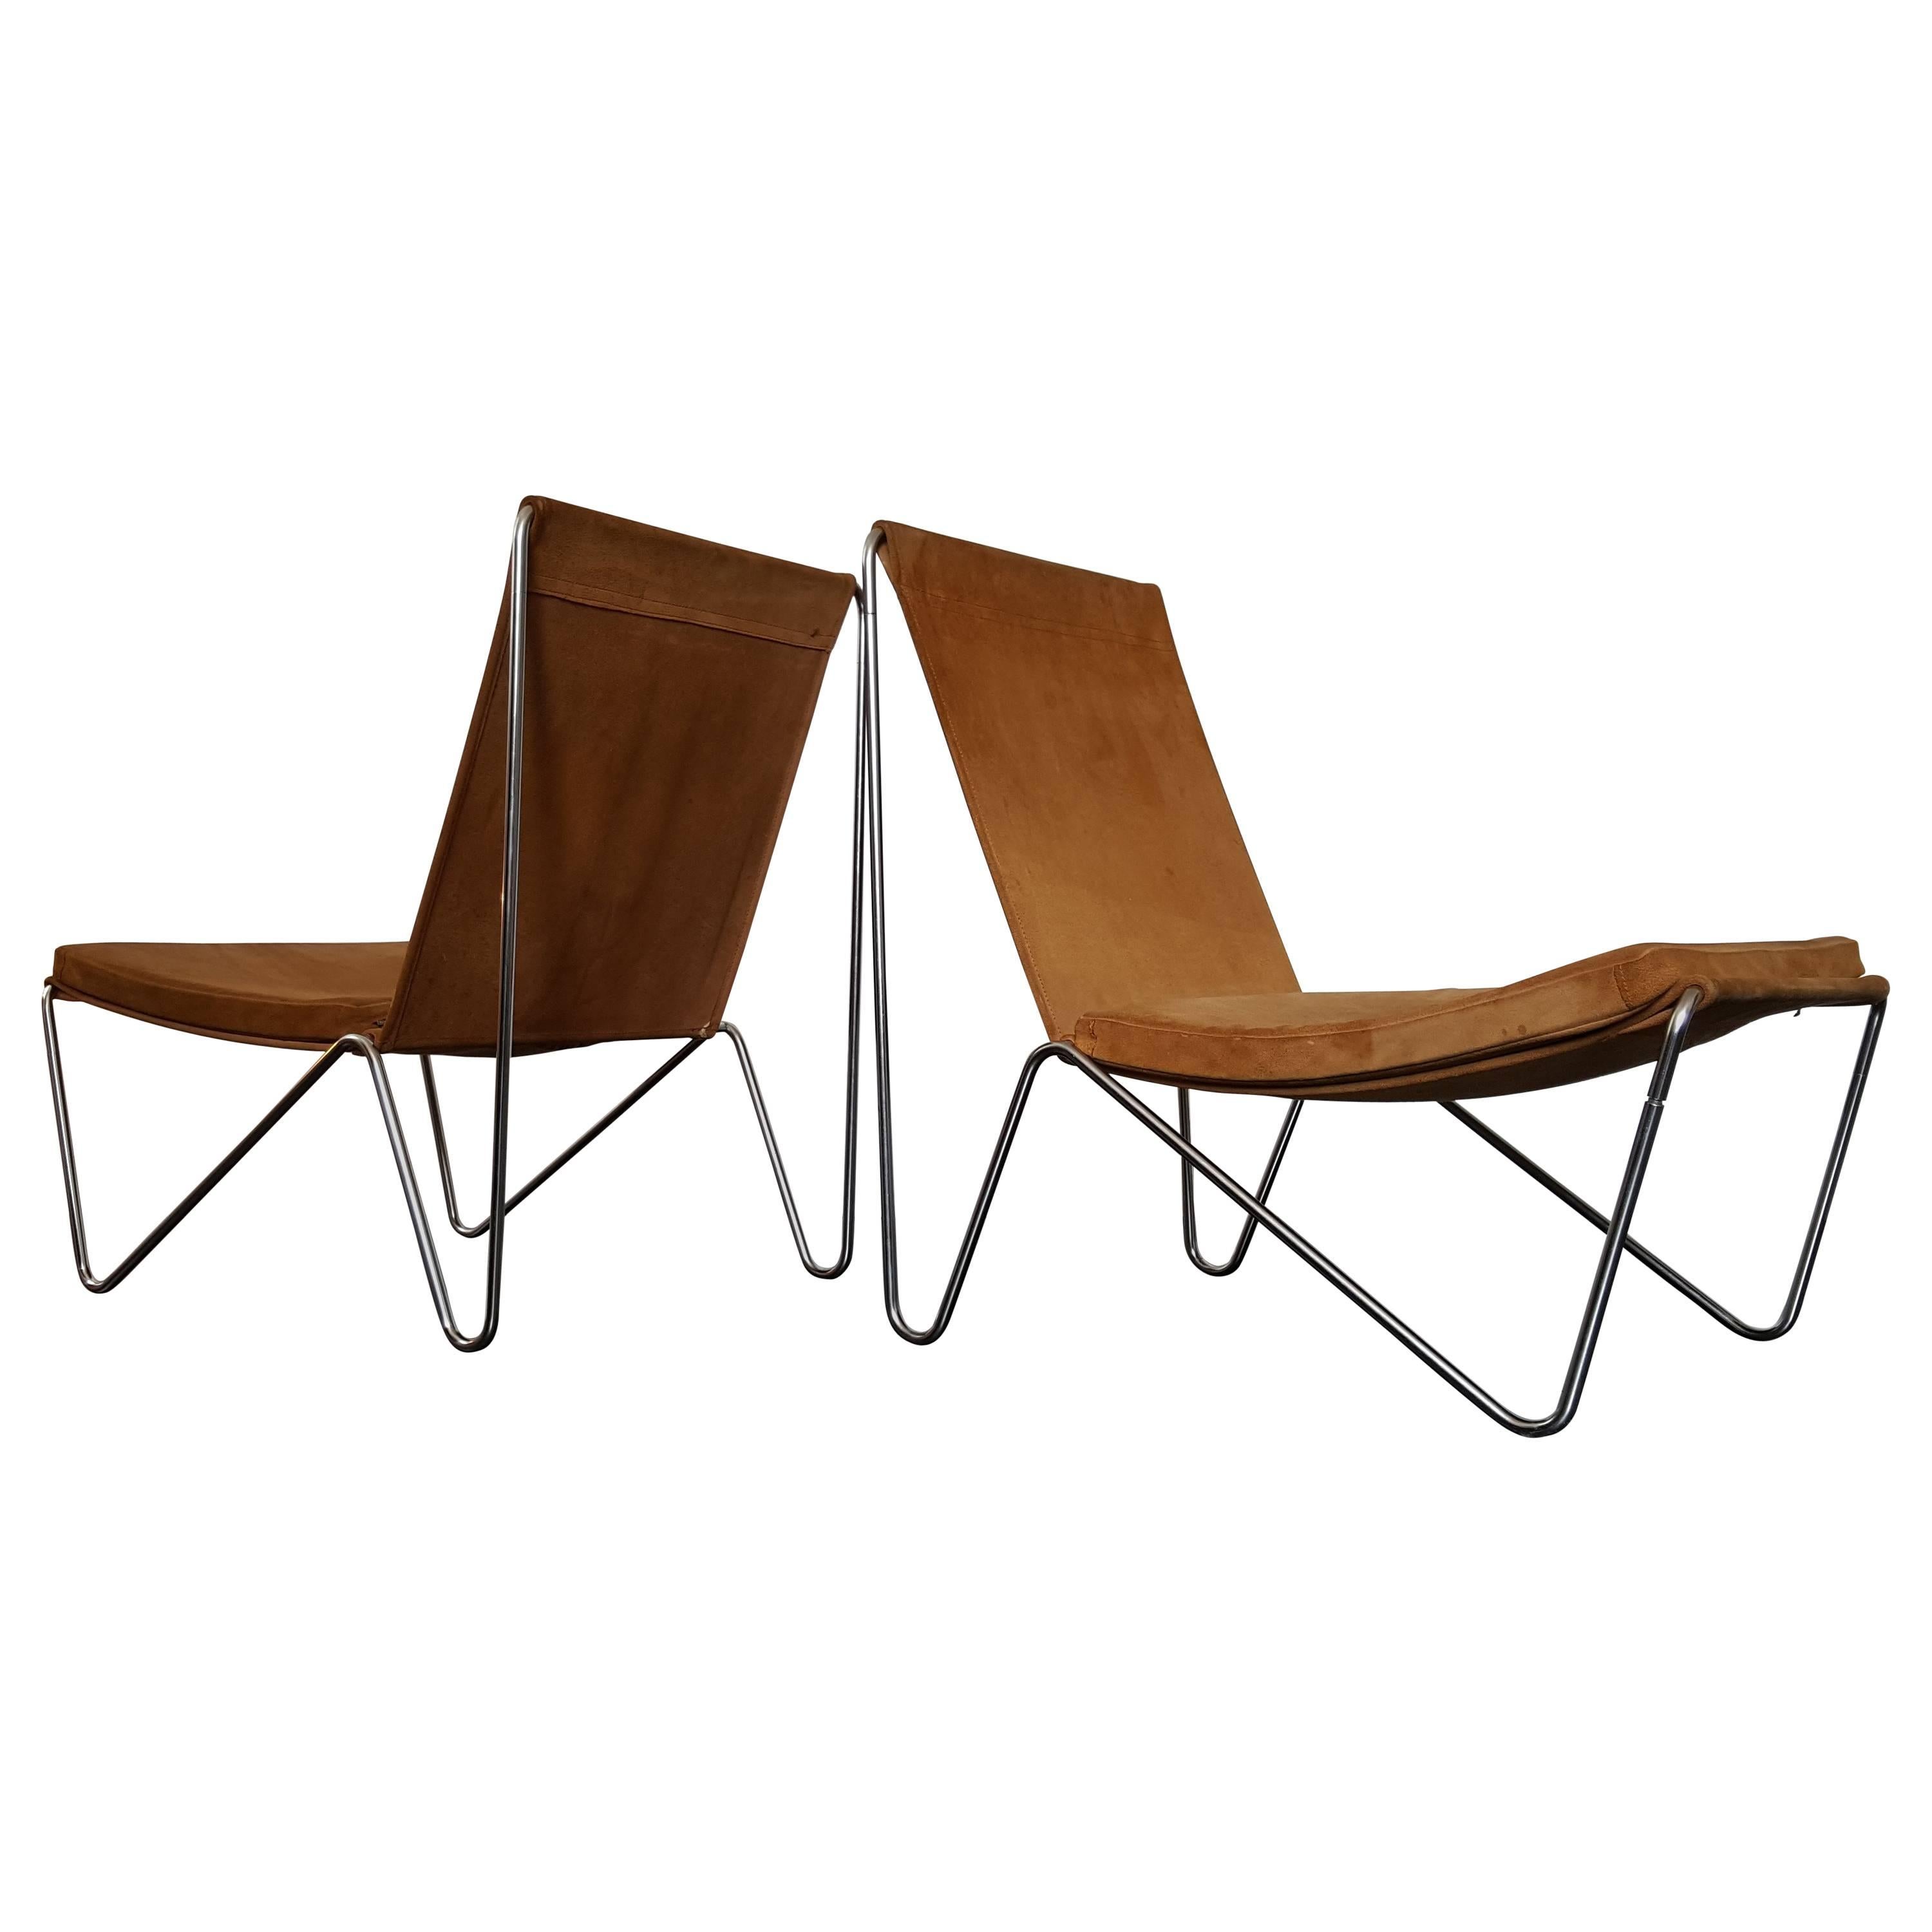 Verner Panton 'Bachelor' Easy Chairs, Manufactured by Fritz Hansen, Denmark